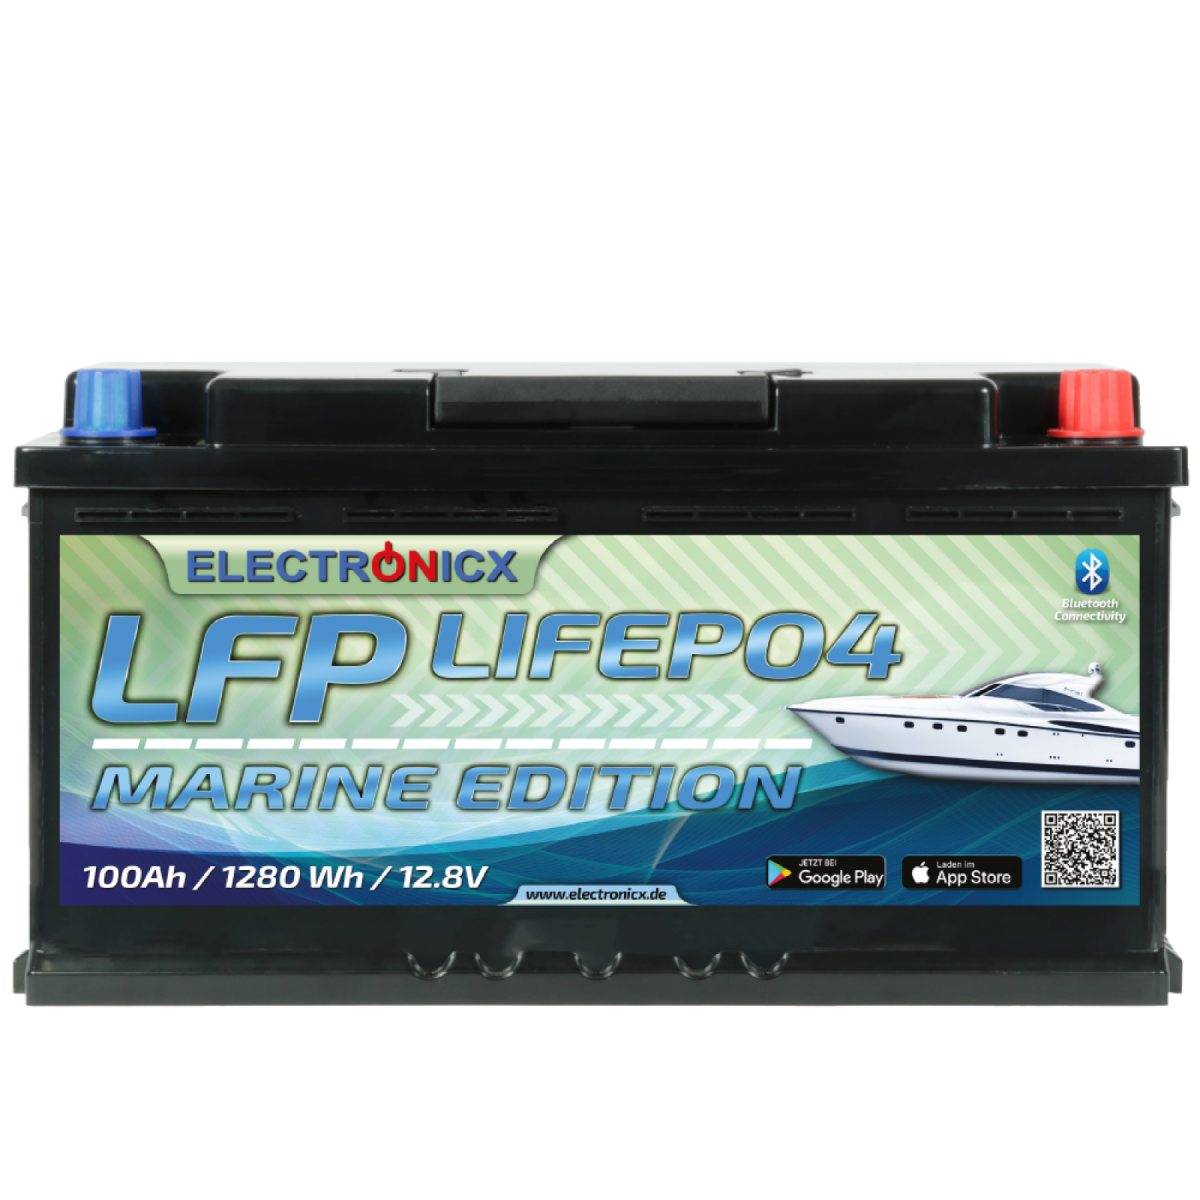 Electronicx Marine Edition LiFePO4 battery 12V 100Ah LFP Bluetooth APP Lithium iron phosphate